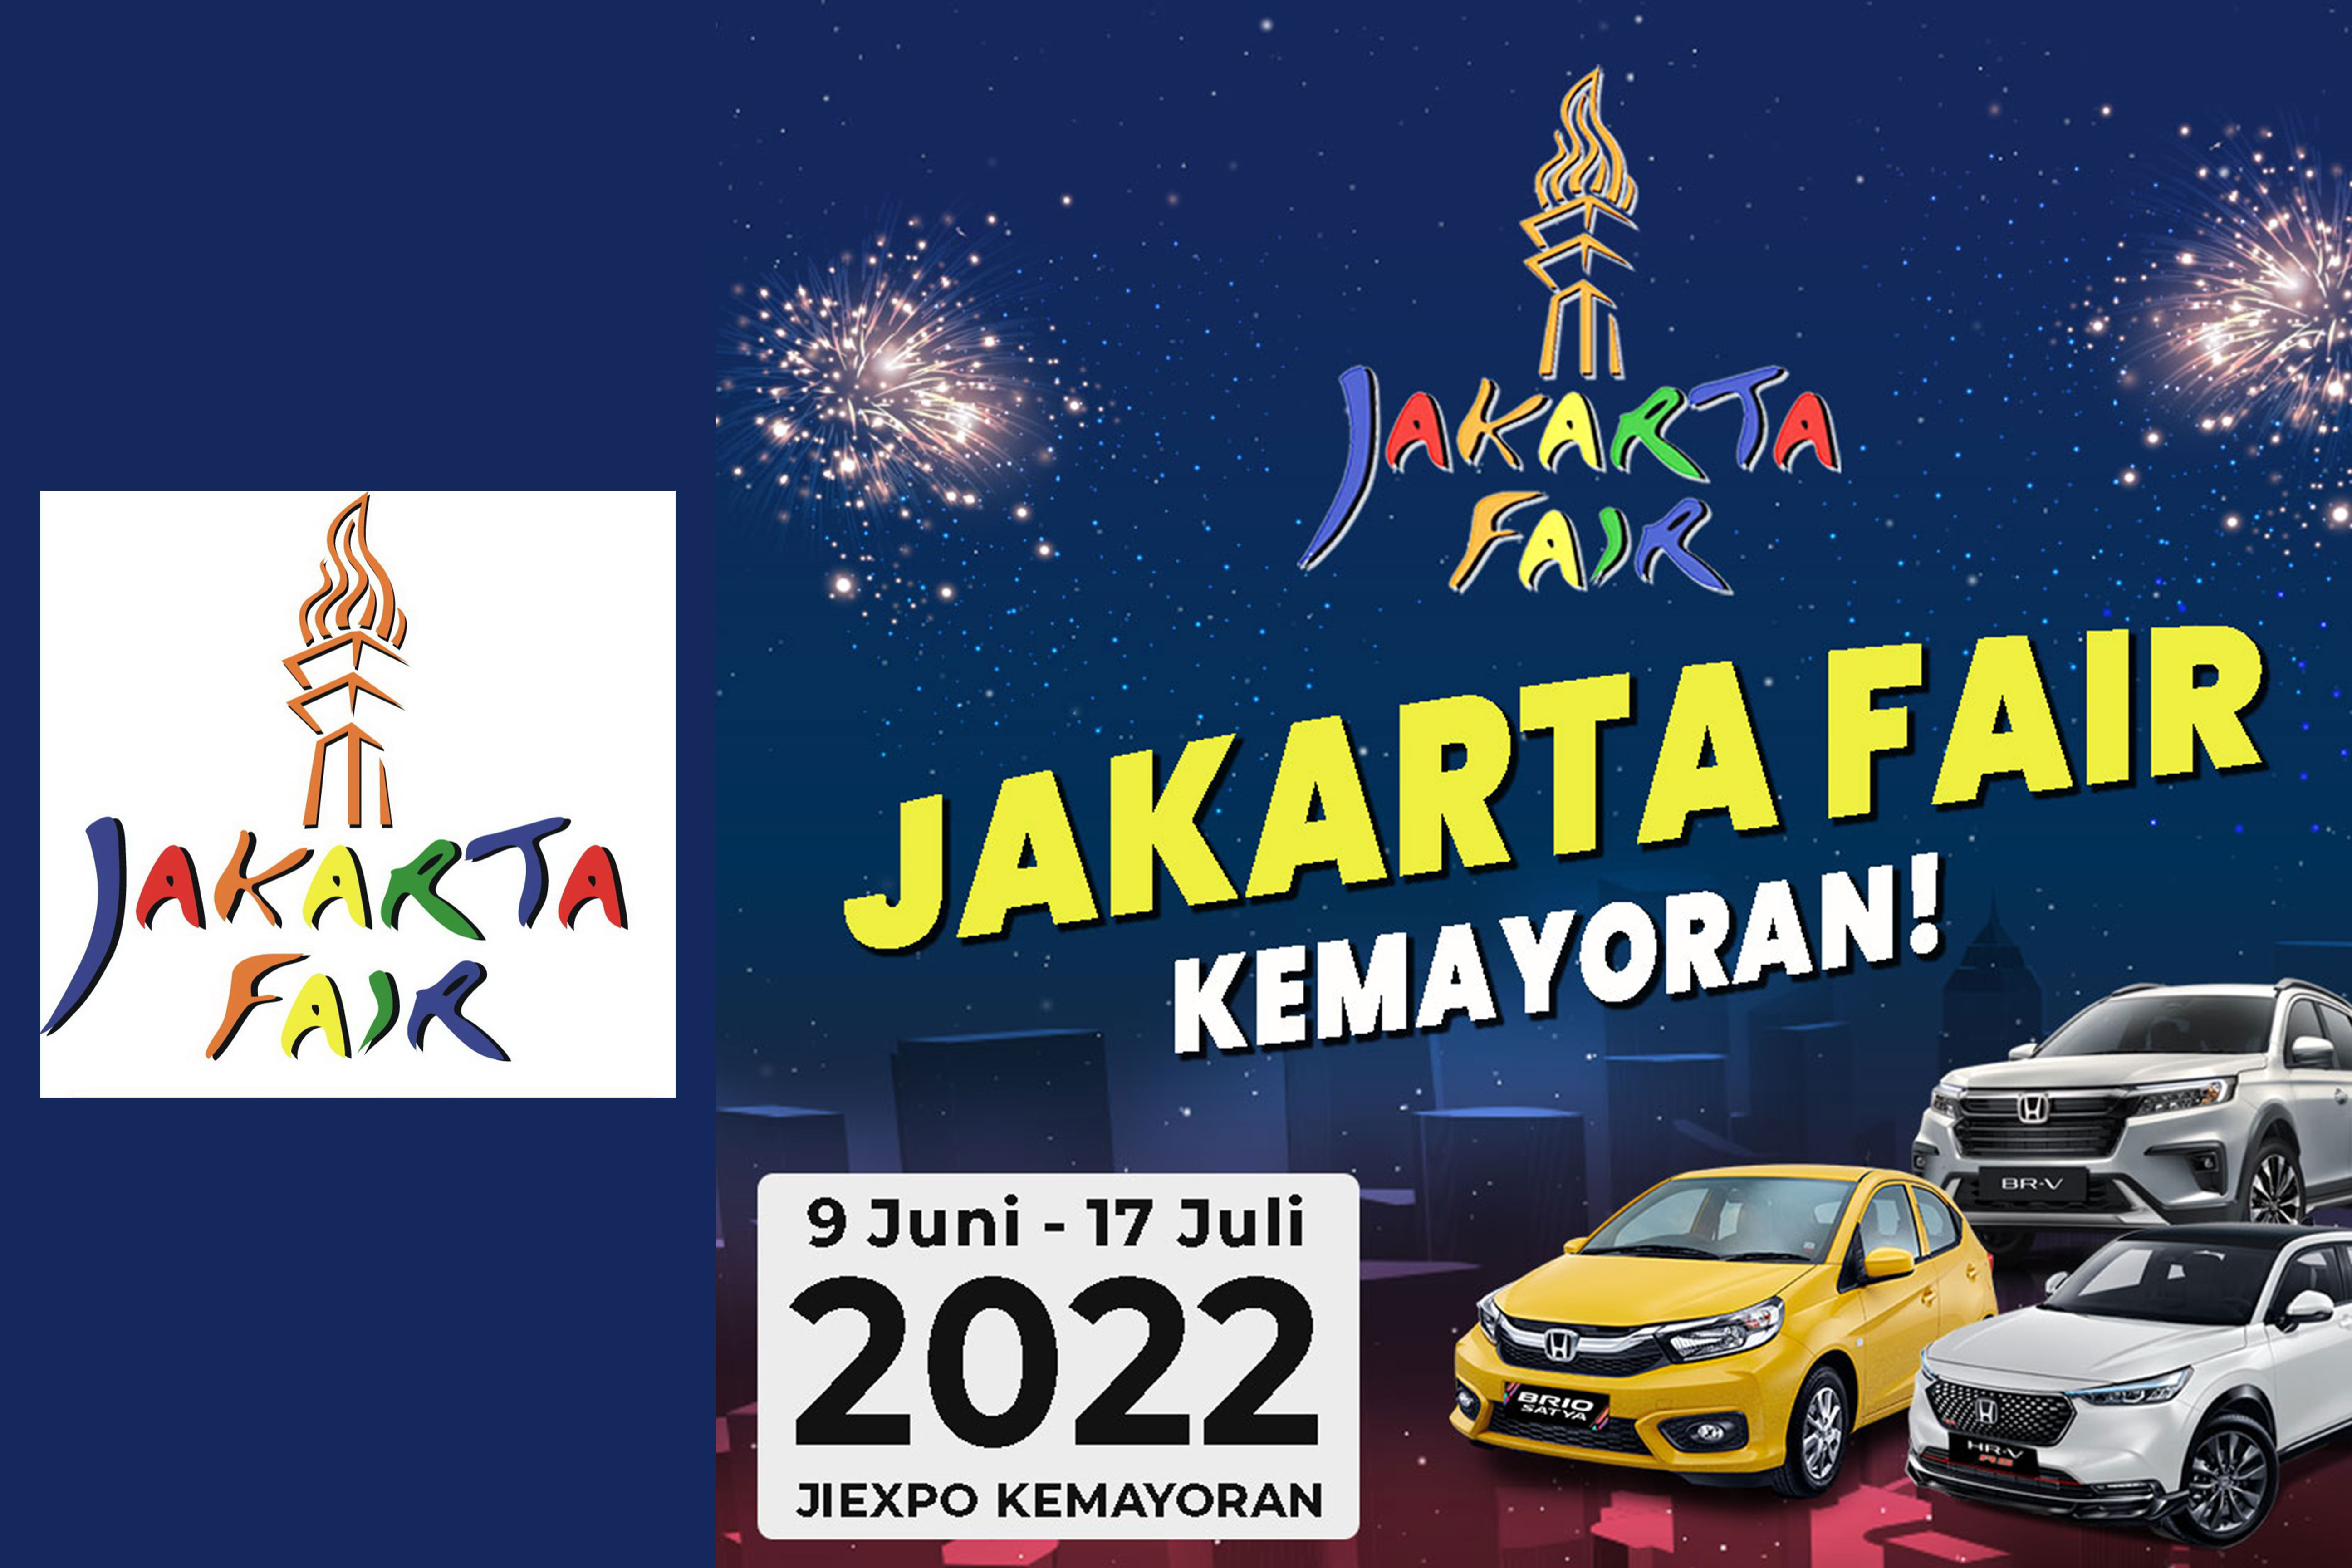 Pekan Raya Jakarta 2022 (Jakarta Fair Kemayoran)